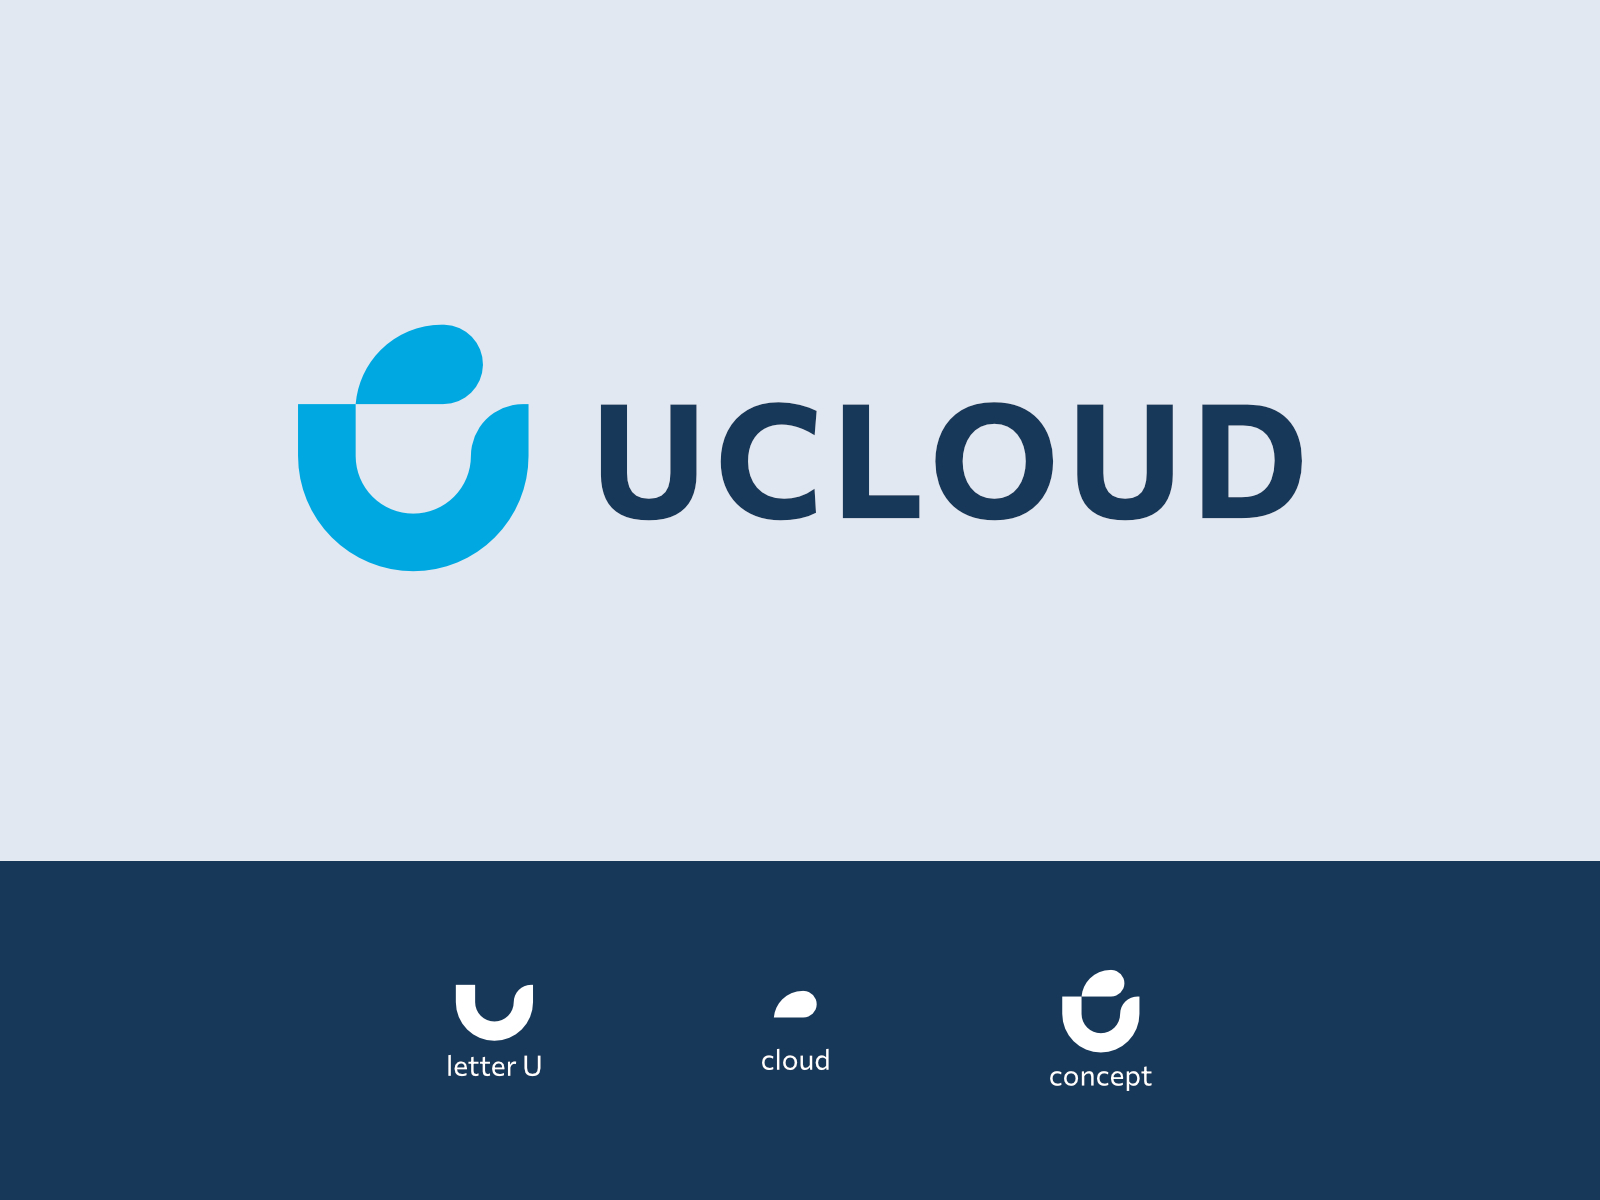 U Cloud Logo by Md Fakrul Islam on Dribbble